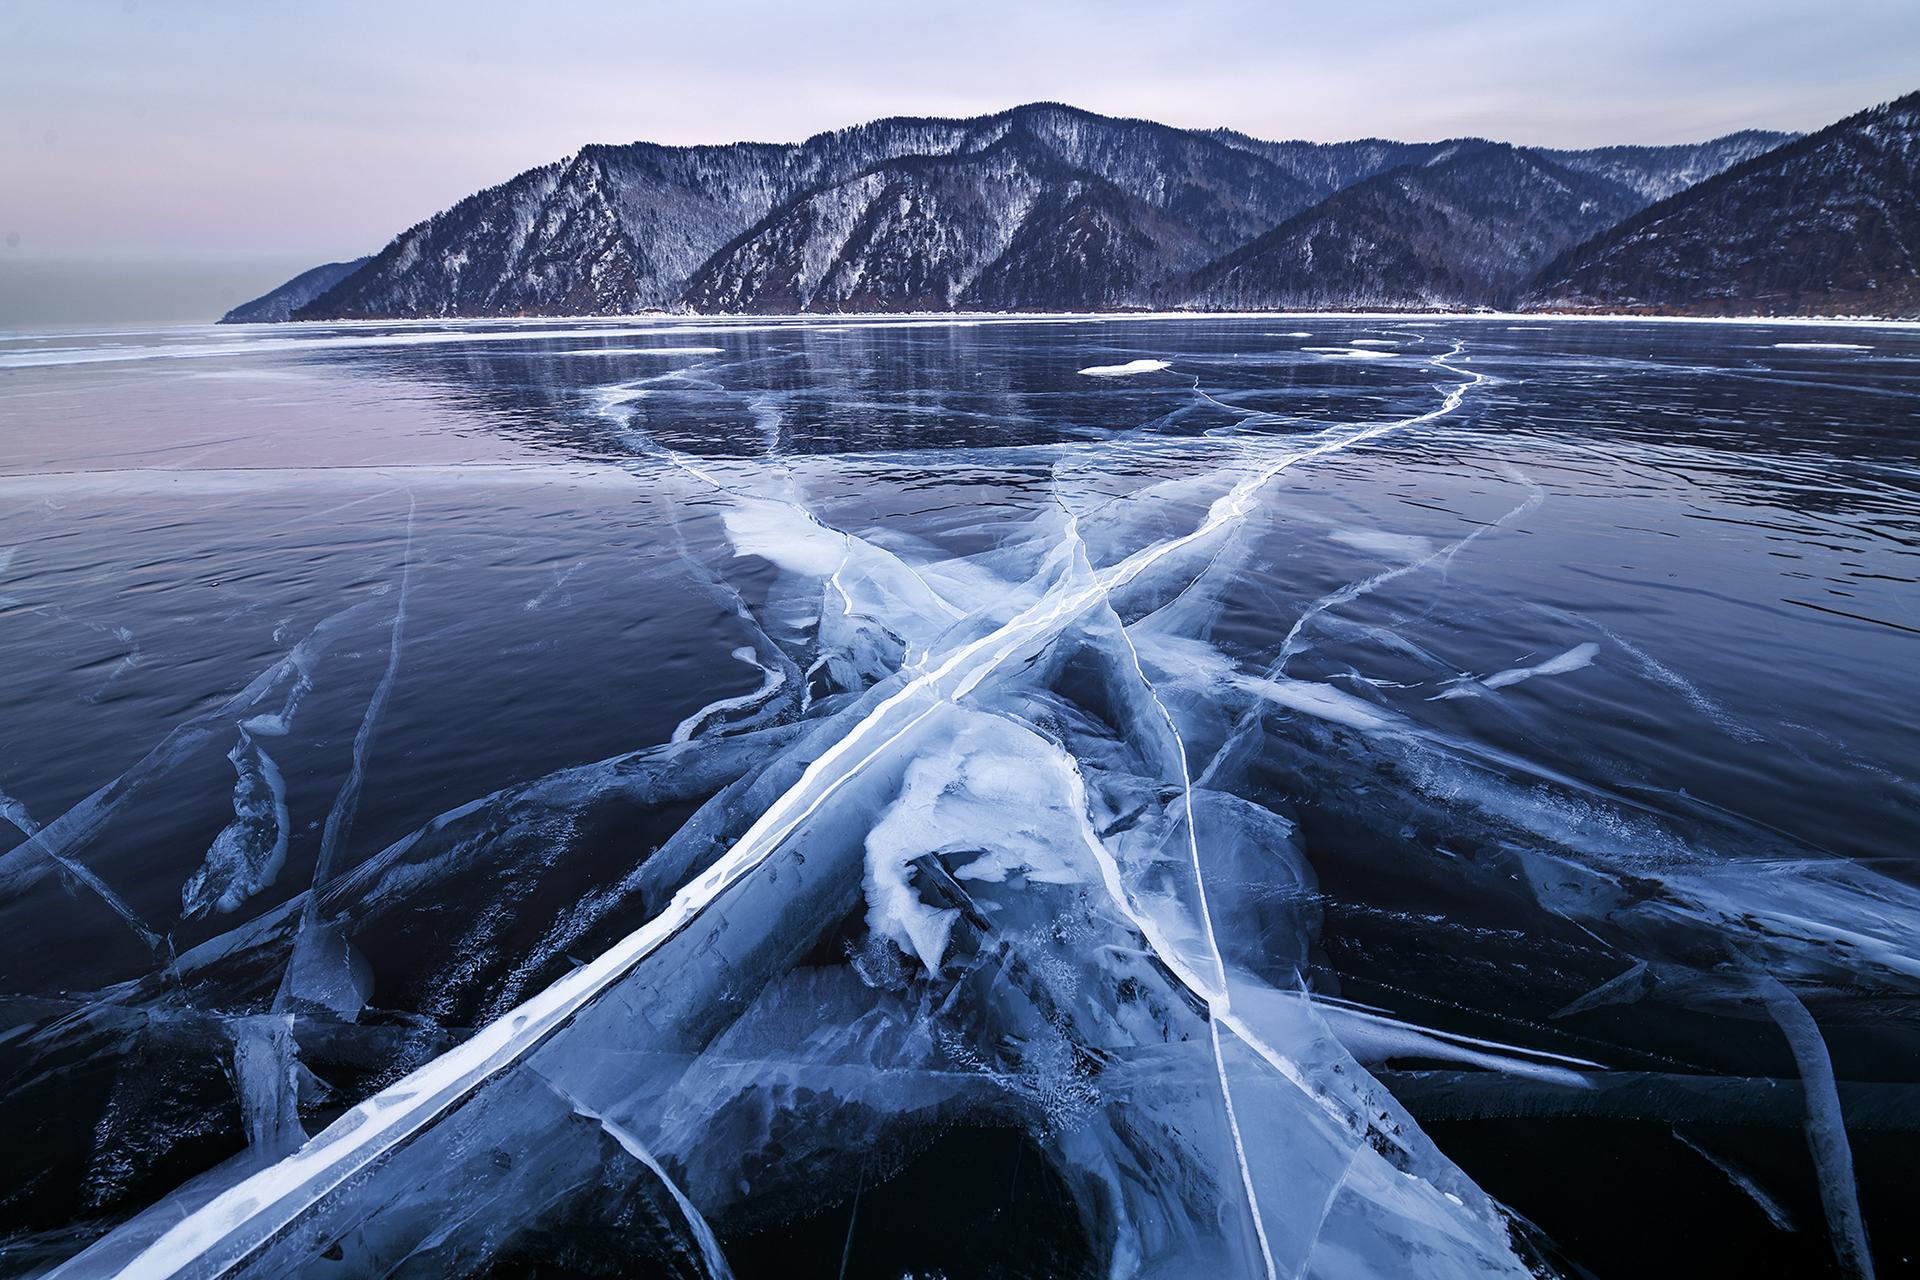 London Photography Awards Winner - Wonderful moment of Lake Baikal